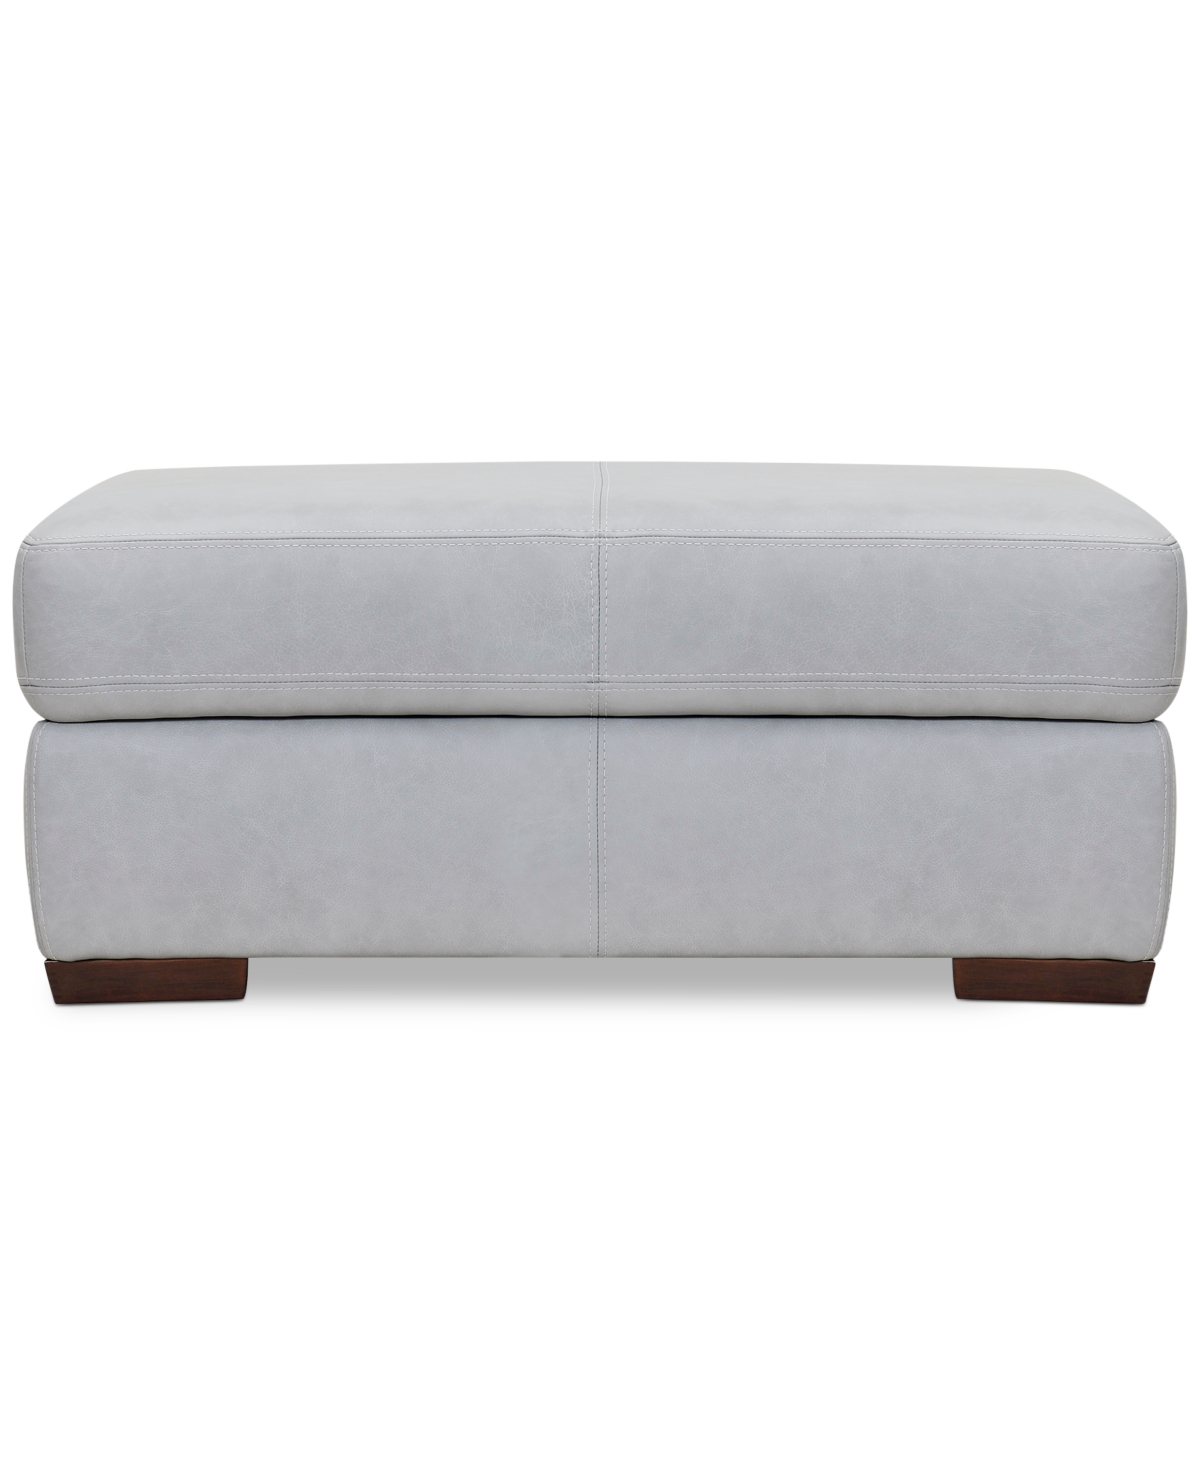 Furniture Ashlinn 43" Pastel Leather Storage Ottoman, Created For Macy's In Grey Mist